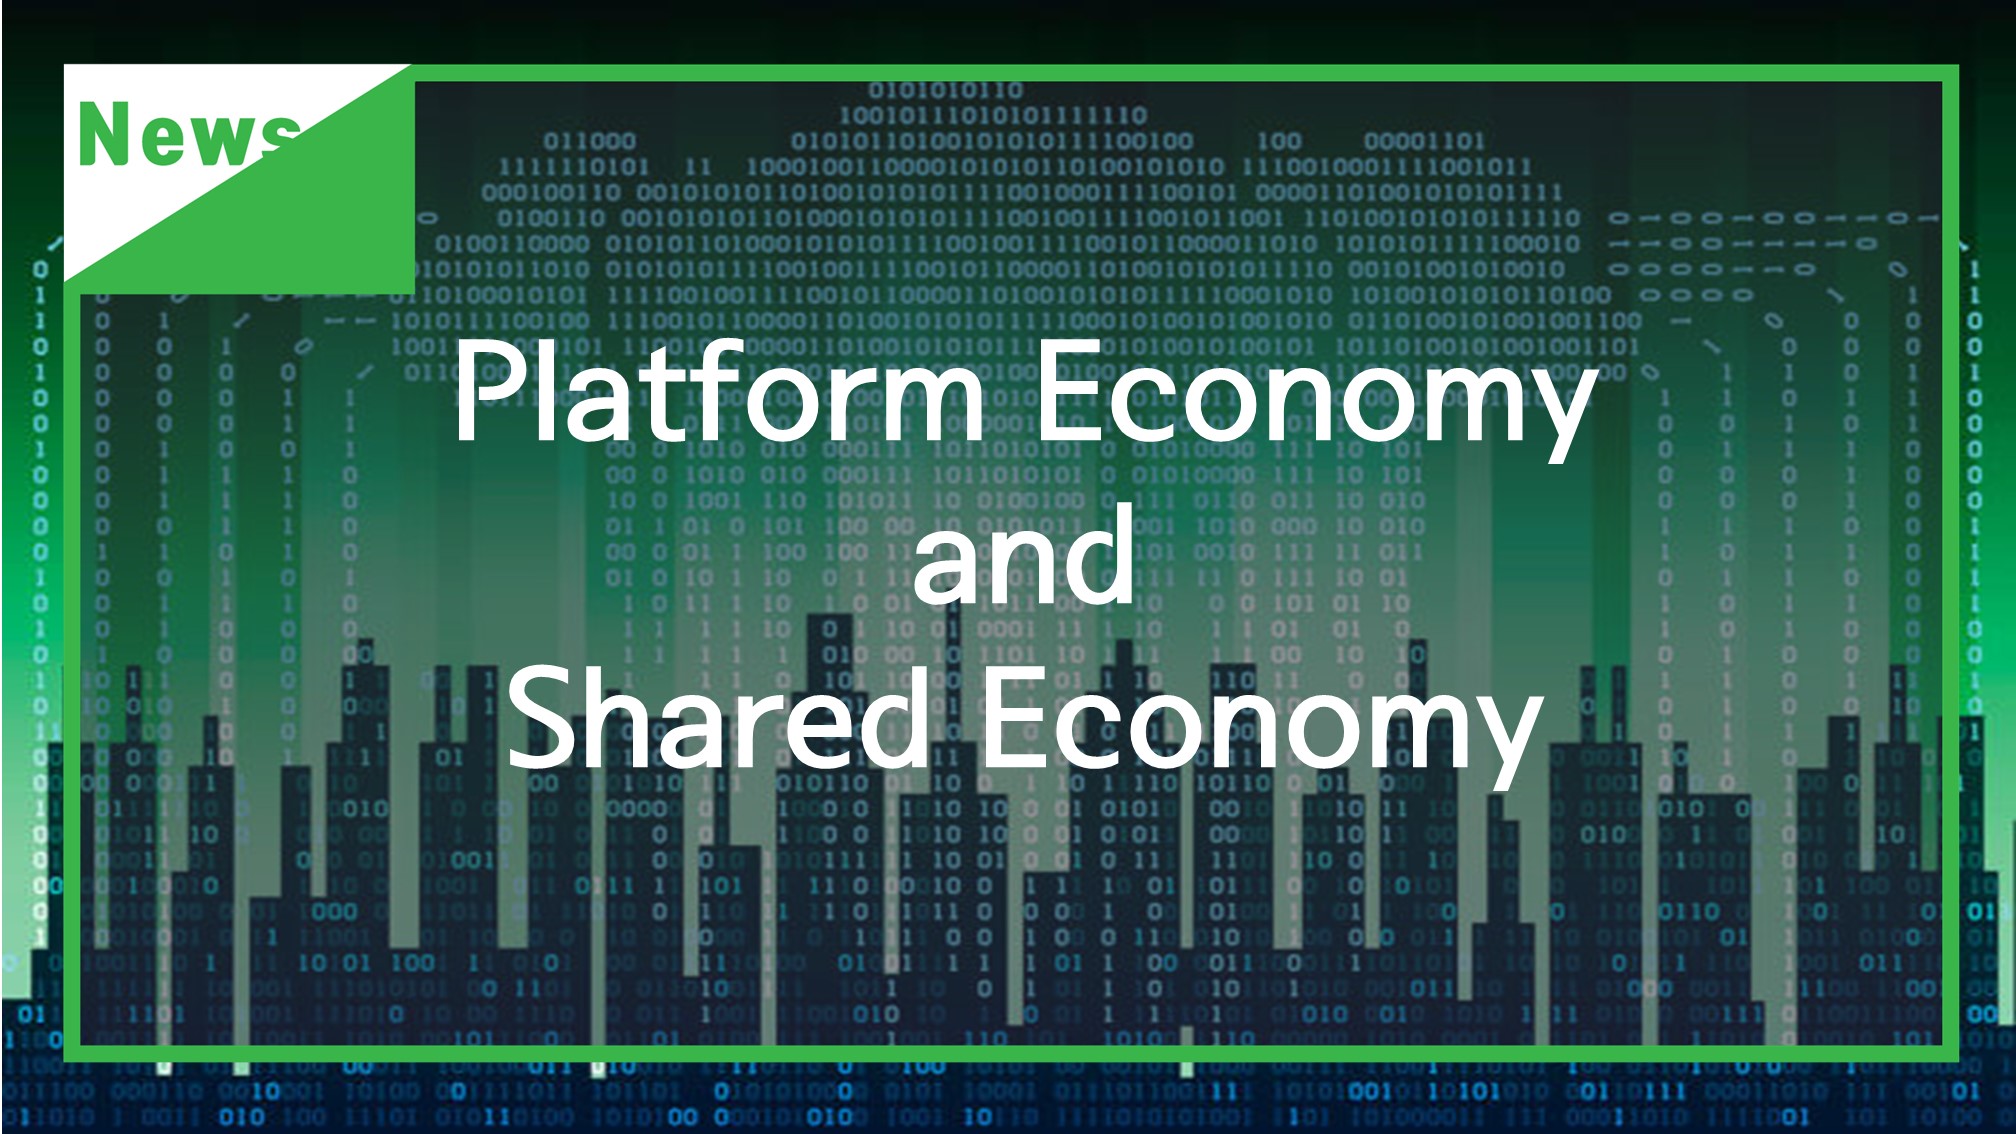 [News] Platform Economy and Shared Economy